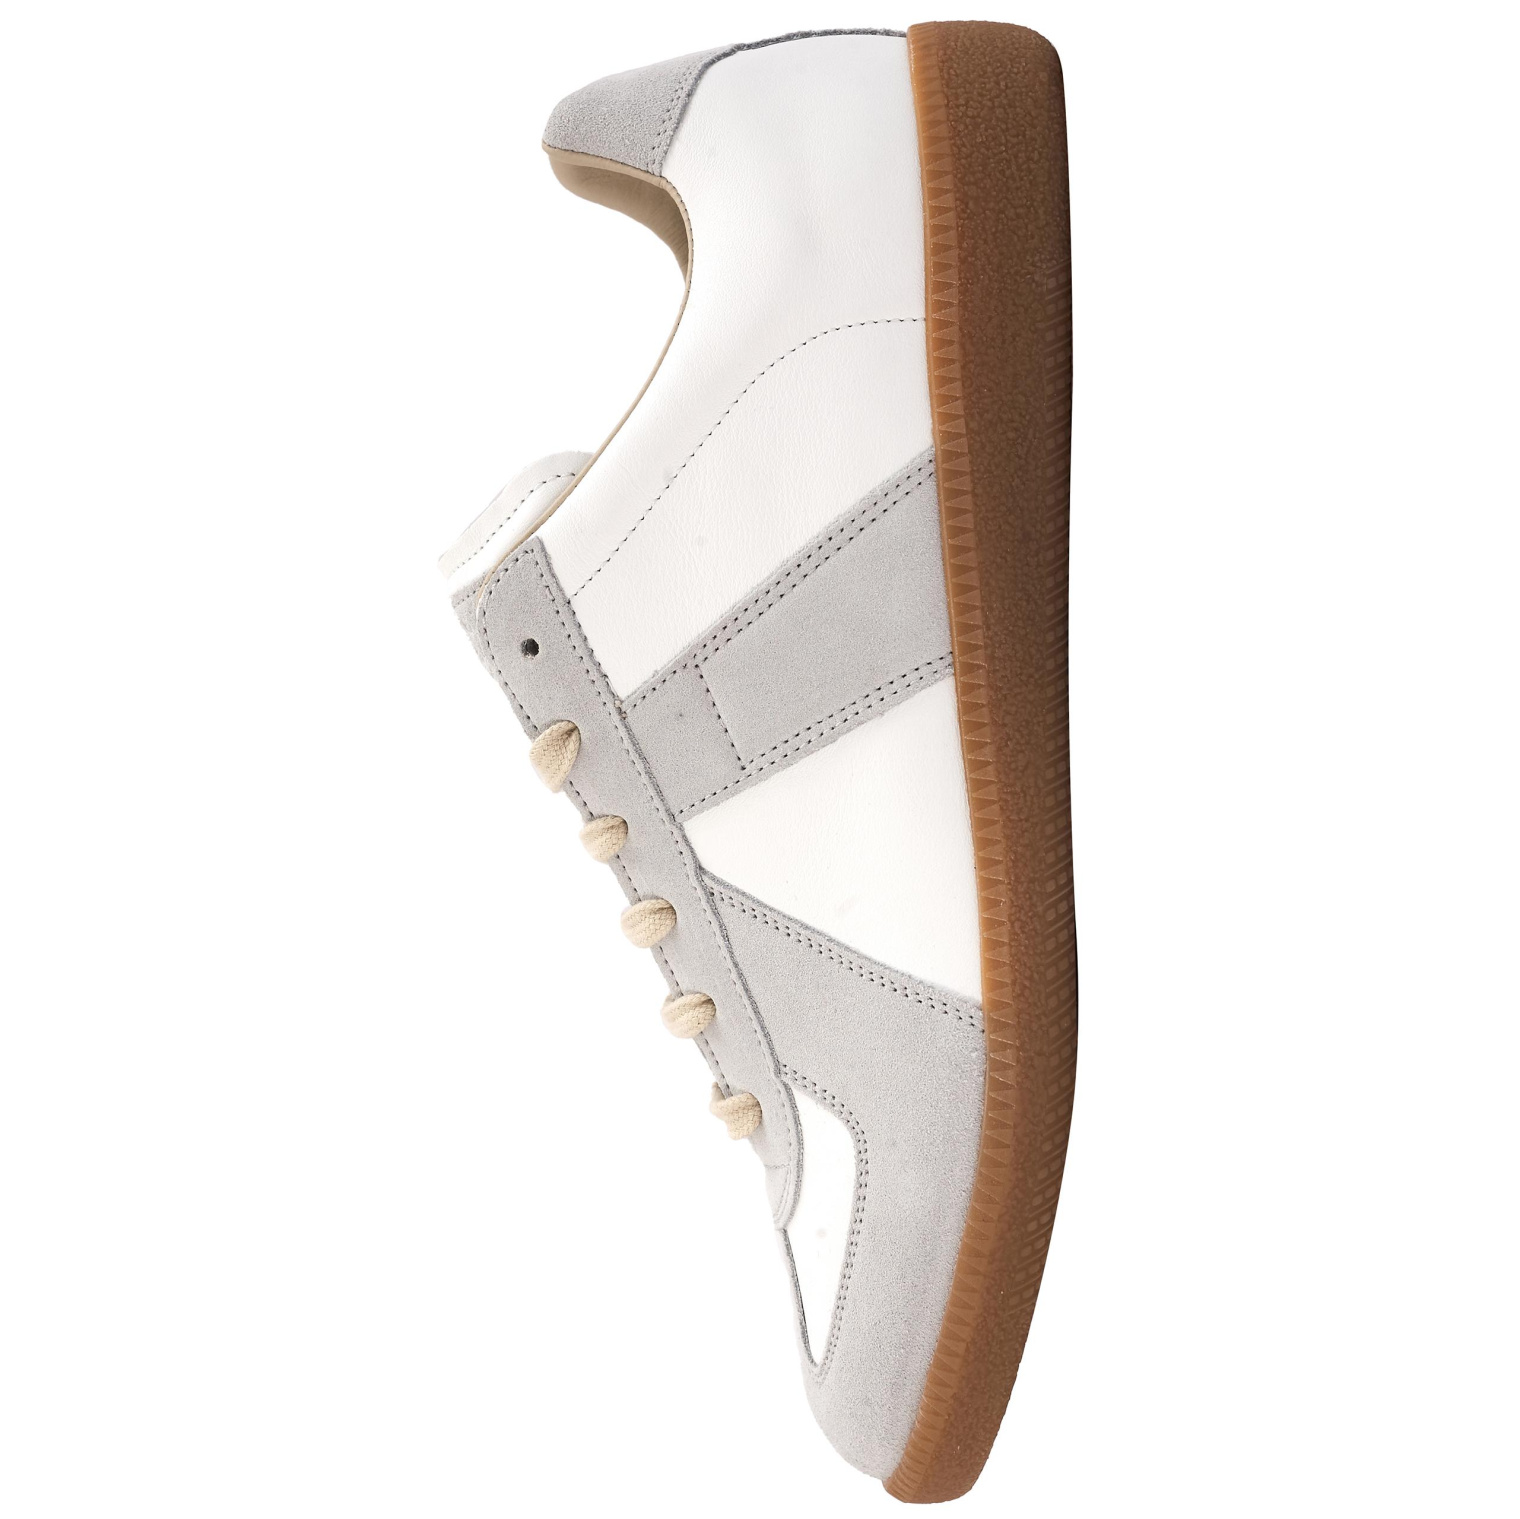 Maison Margiela White Leather & Suede Replica Sneakers